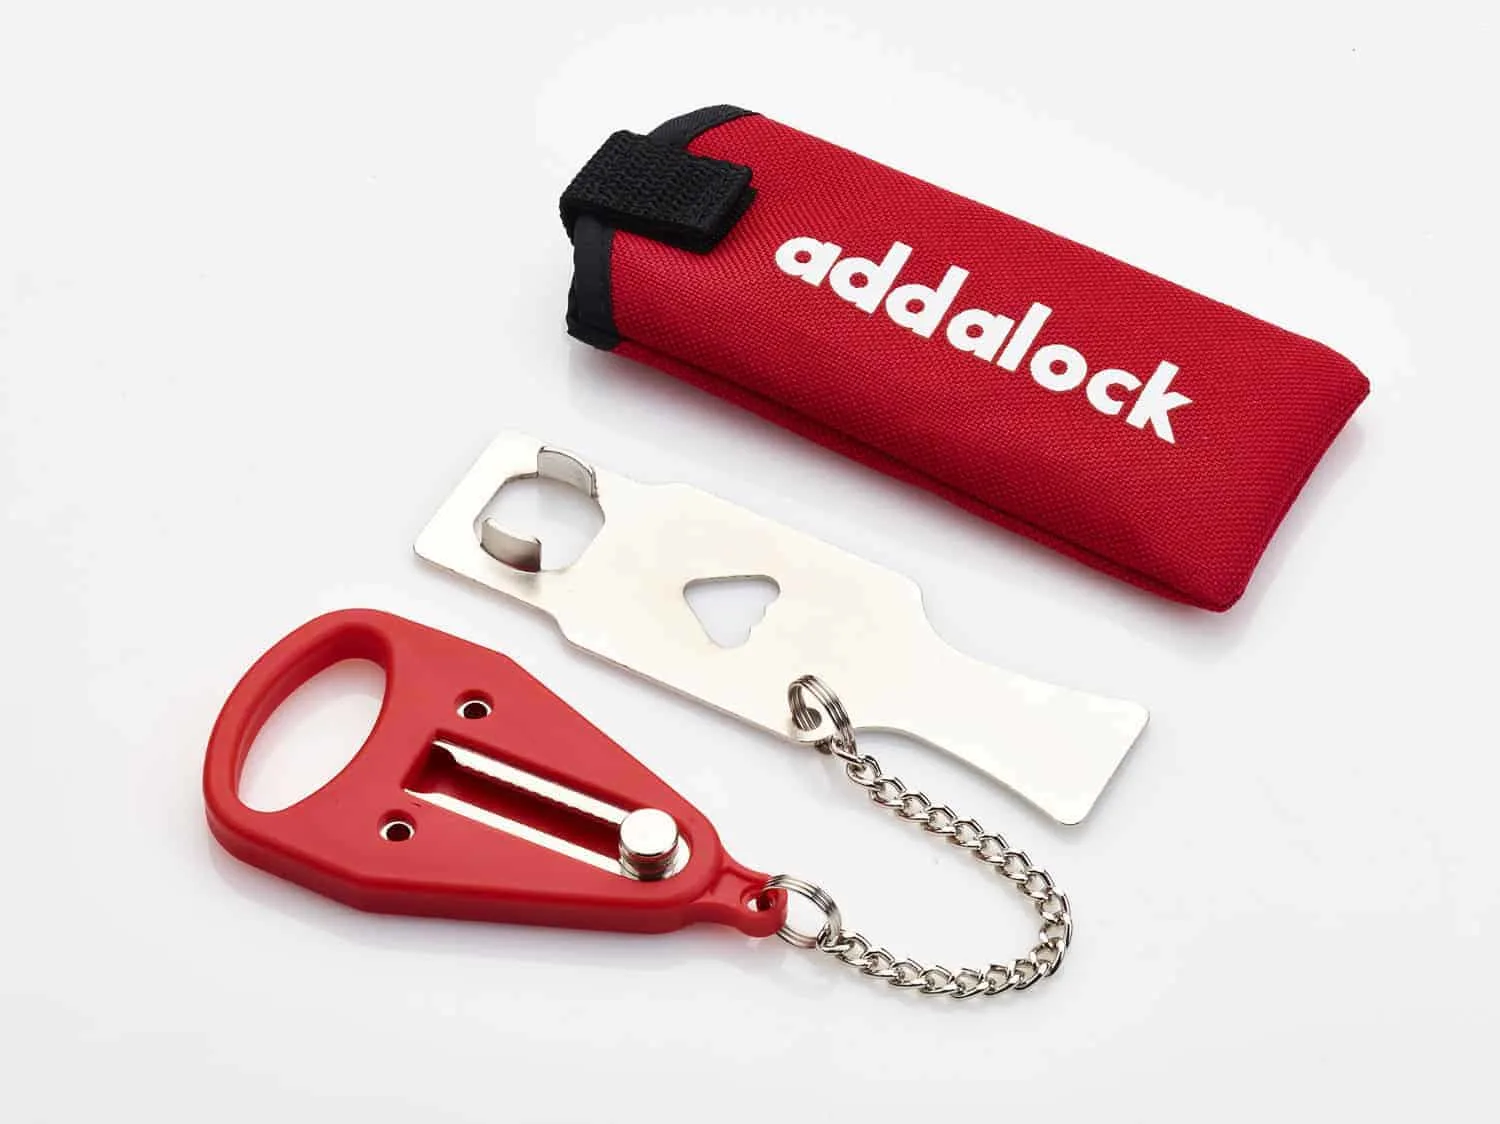 Addalock Portable Door Lock for Extra Security